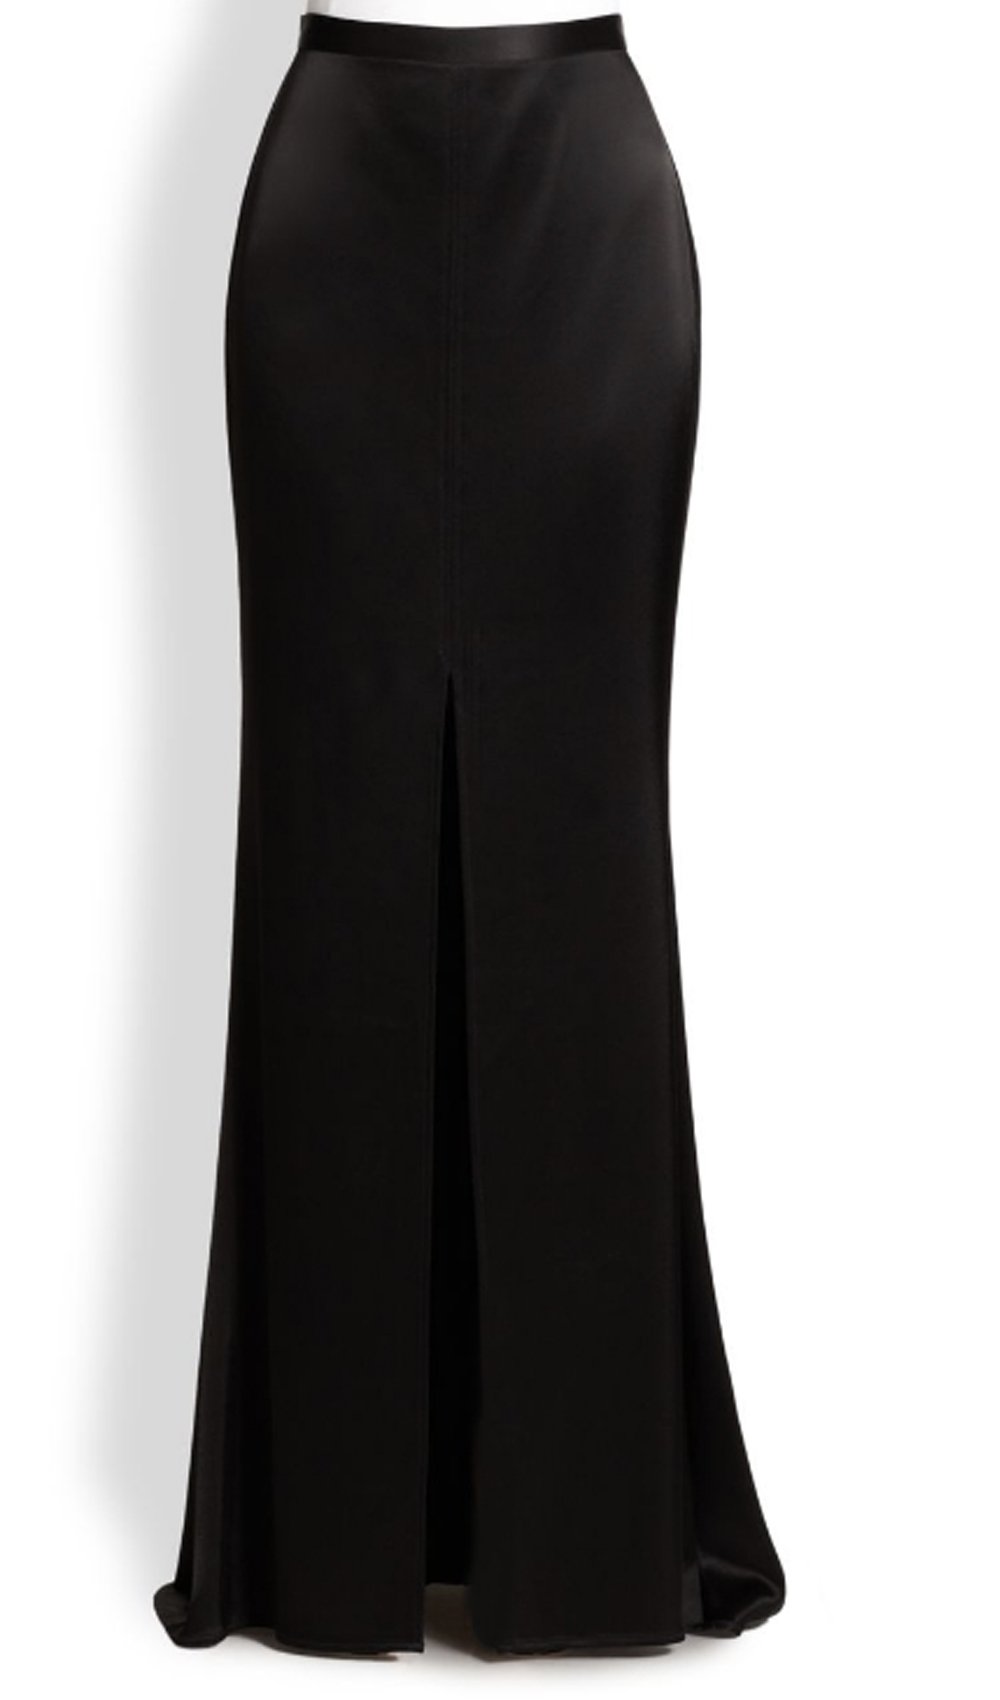 Black Satin High Waisted Pencil Skirt, Custom Fit, Handmade, Fully Lined,  Satin Fabric